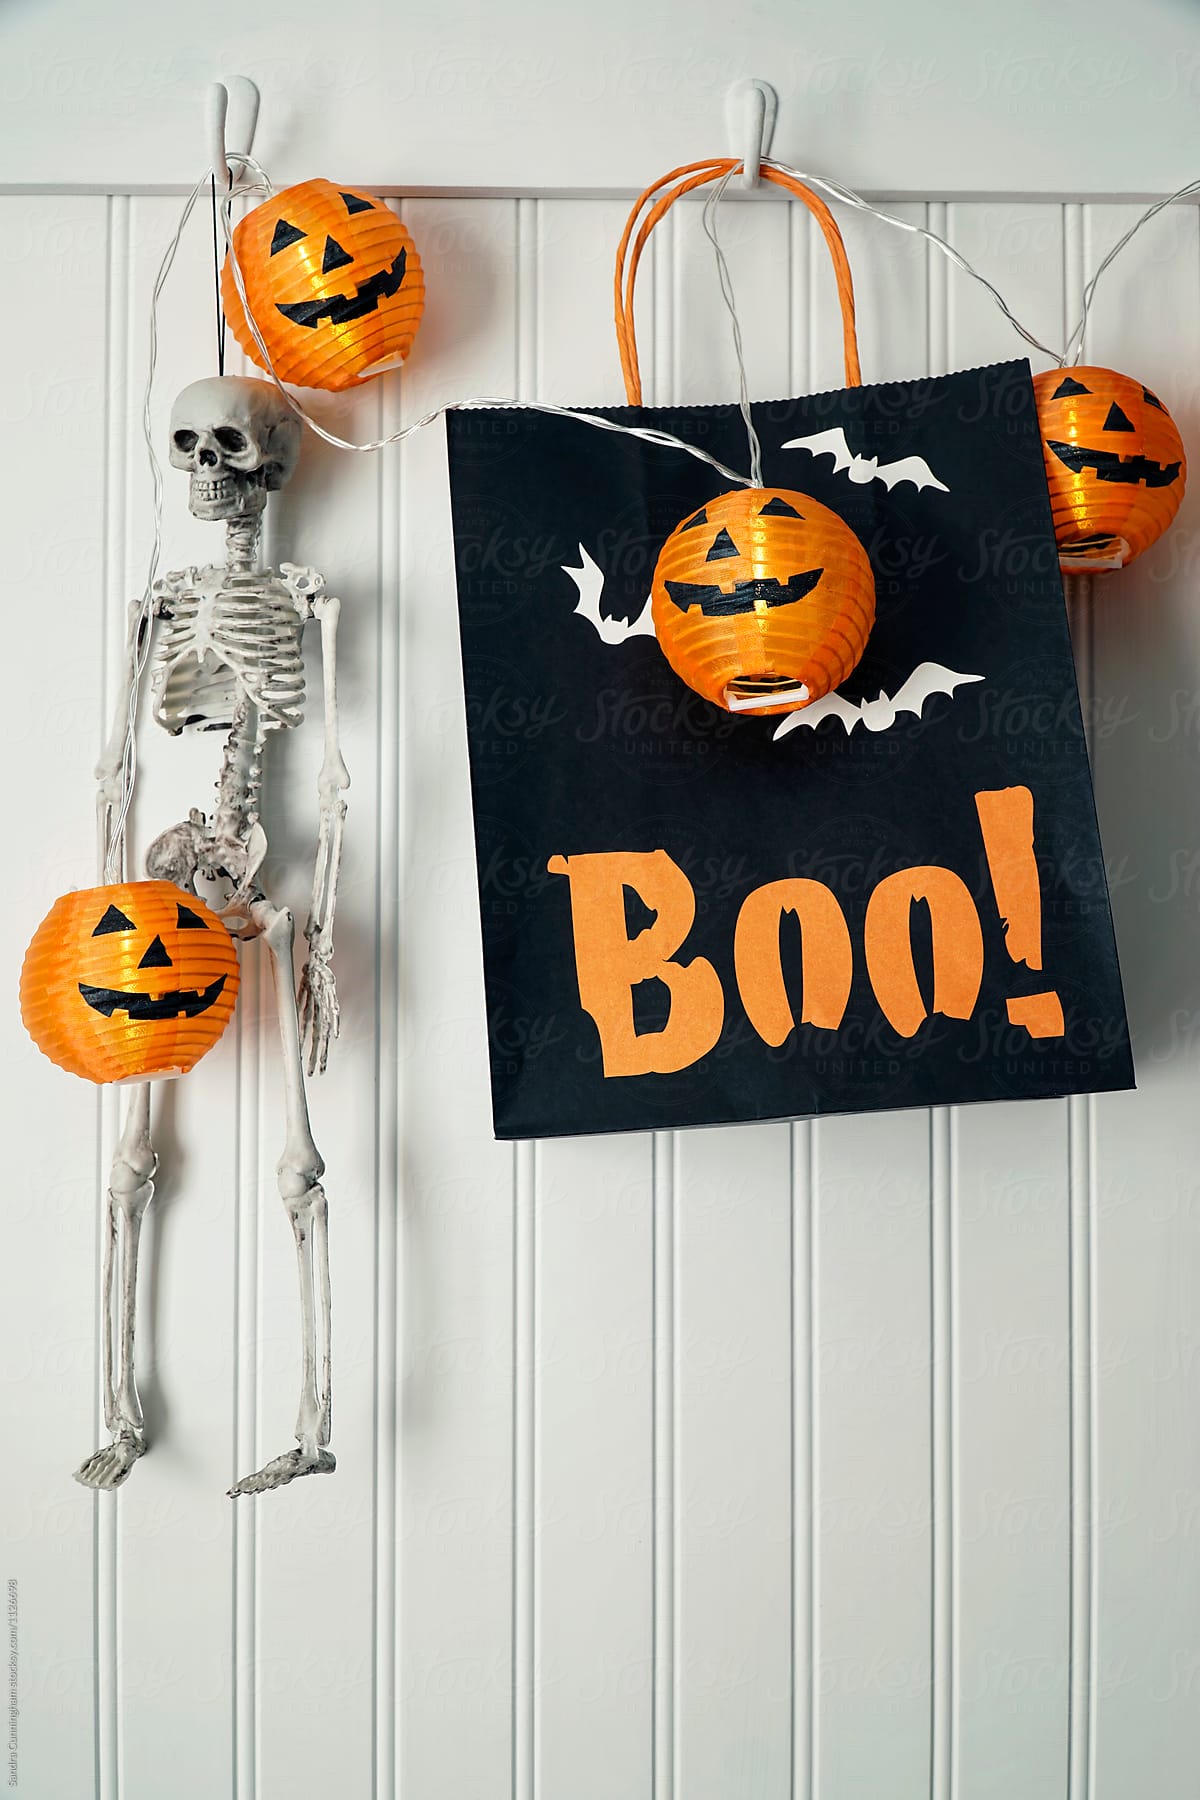 Pumpkin lights and treat bag hanging on hooks for Halloween